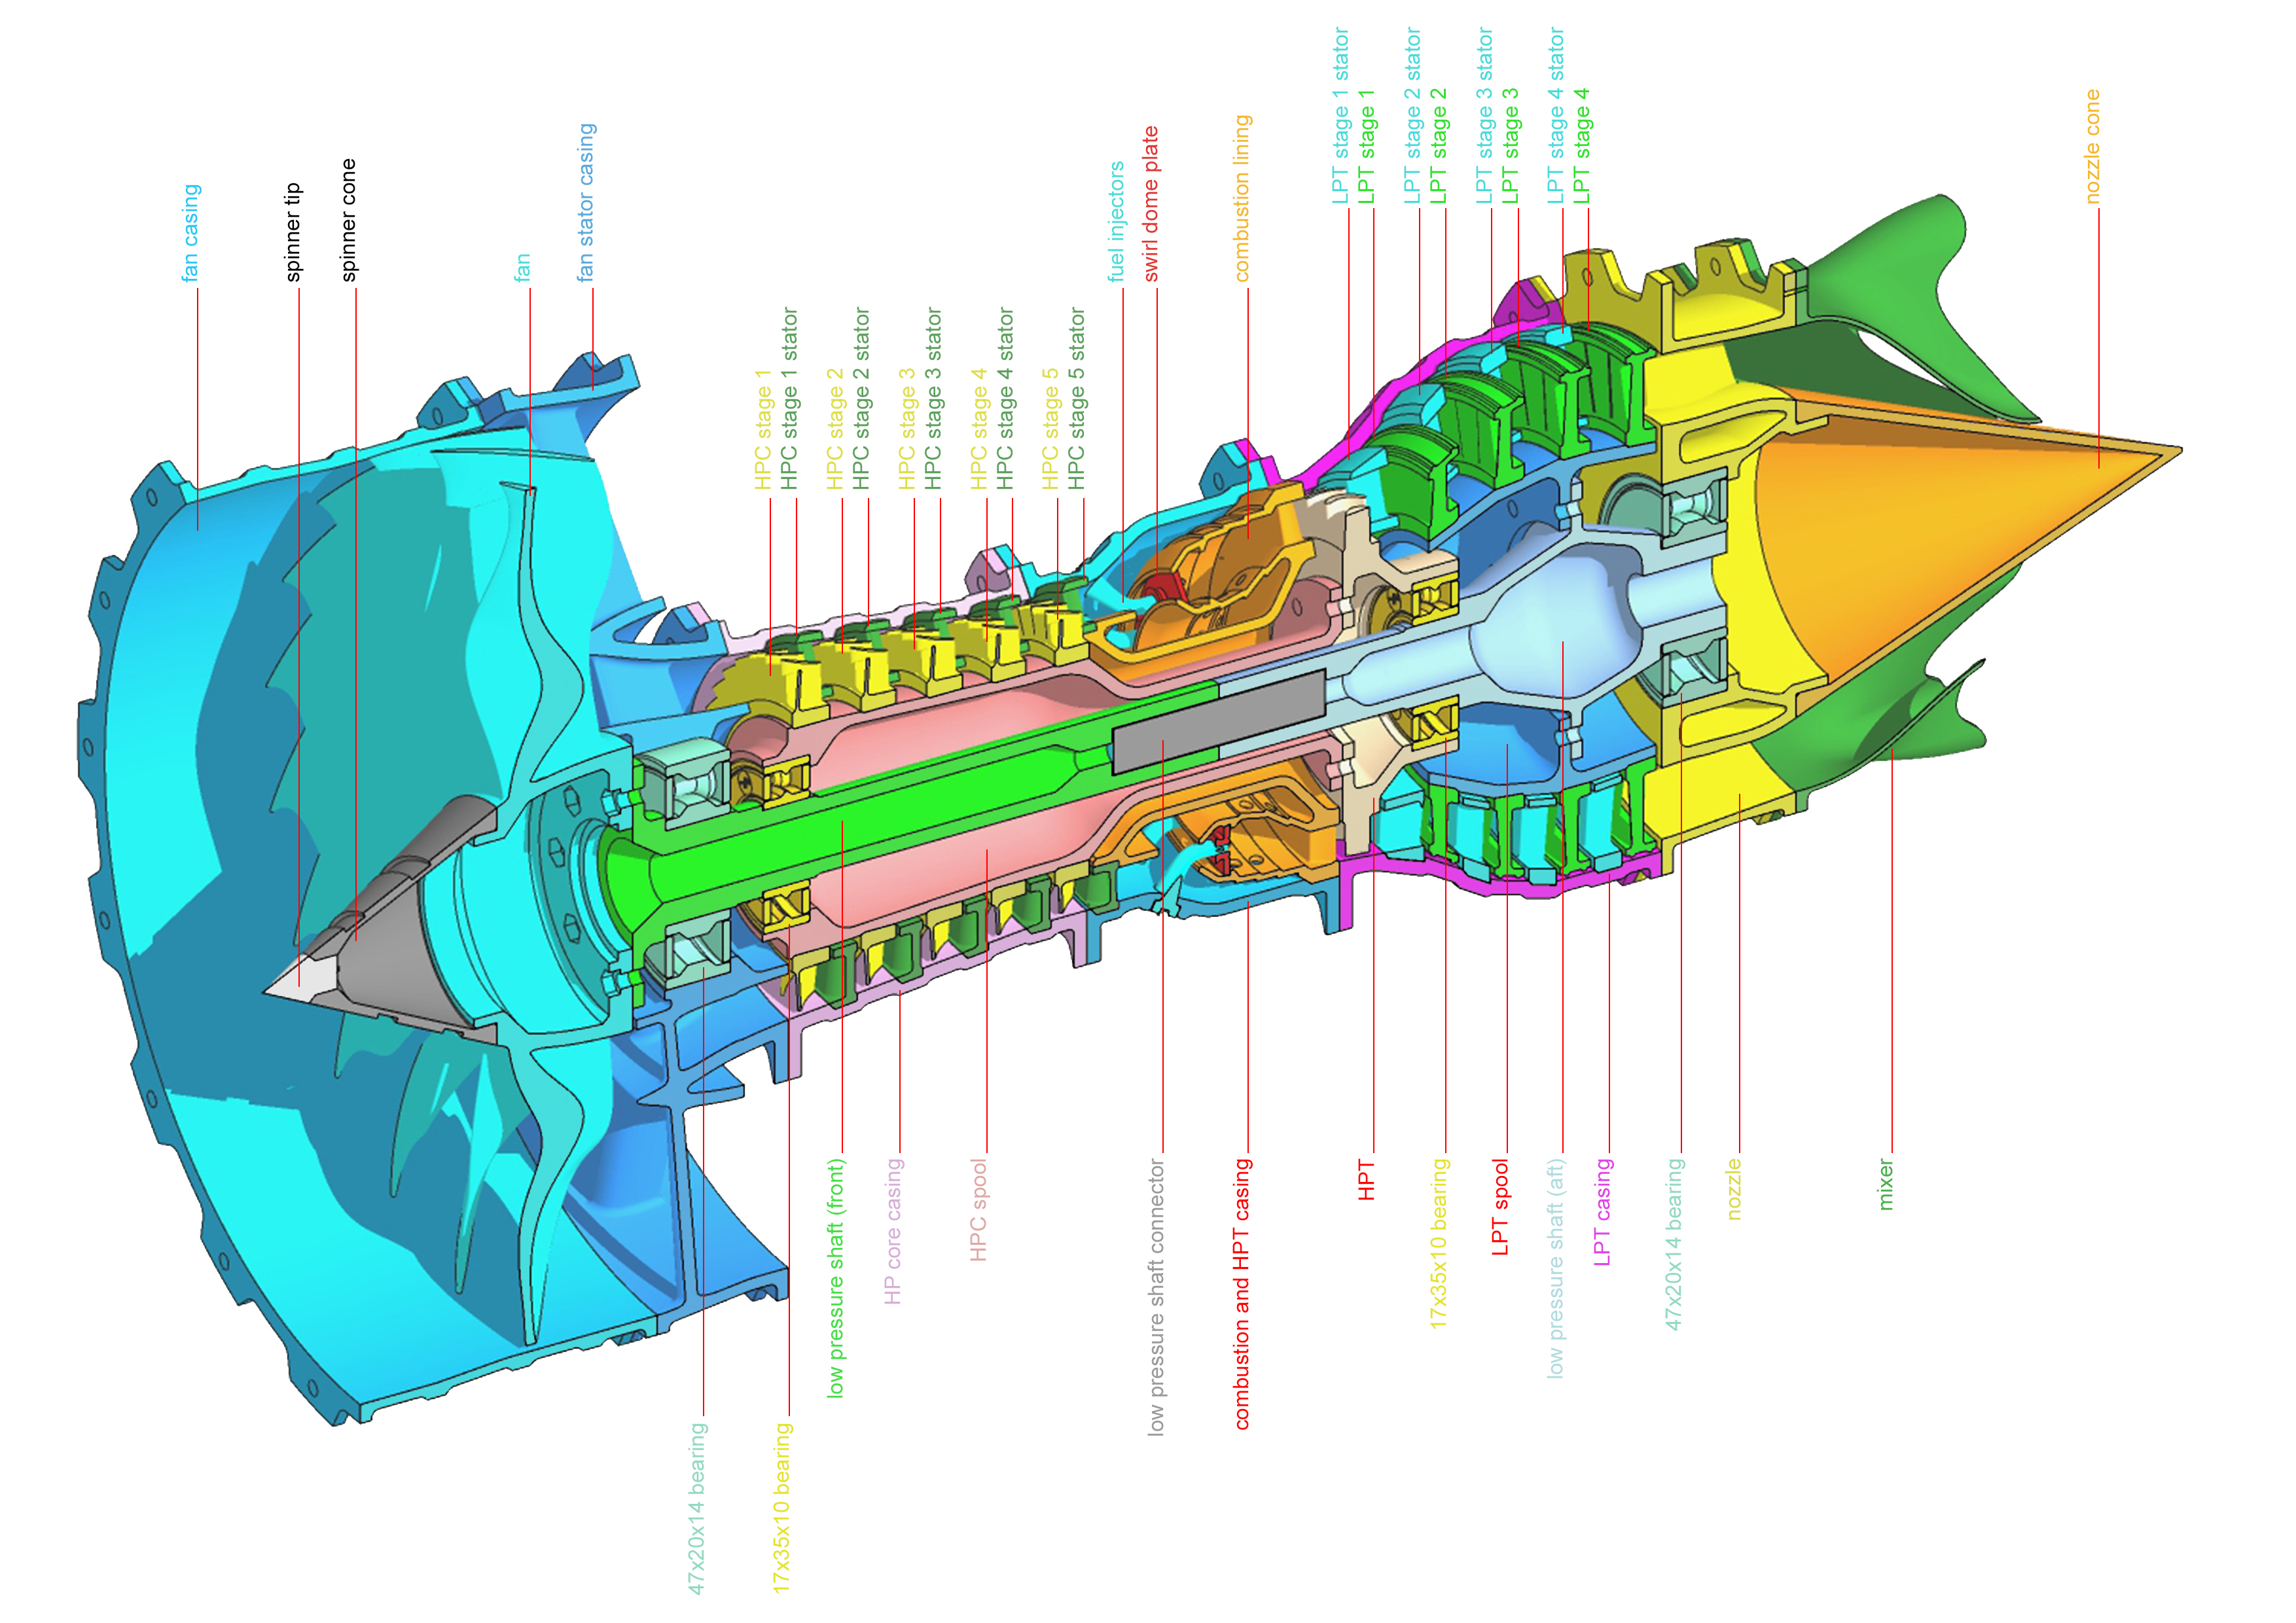 Assembly Diagrams for Catiav5ftw's Jet Engine Model